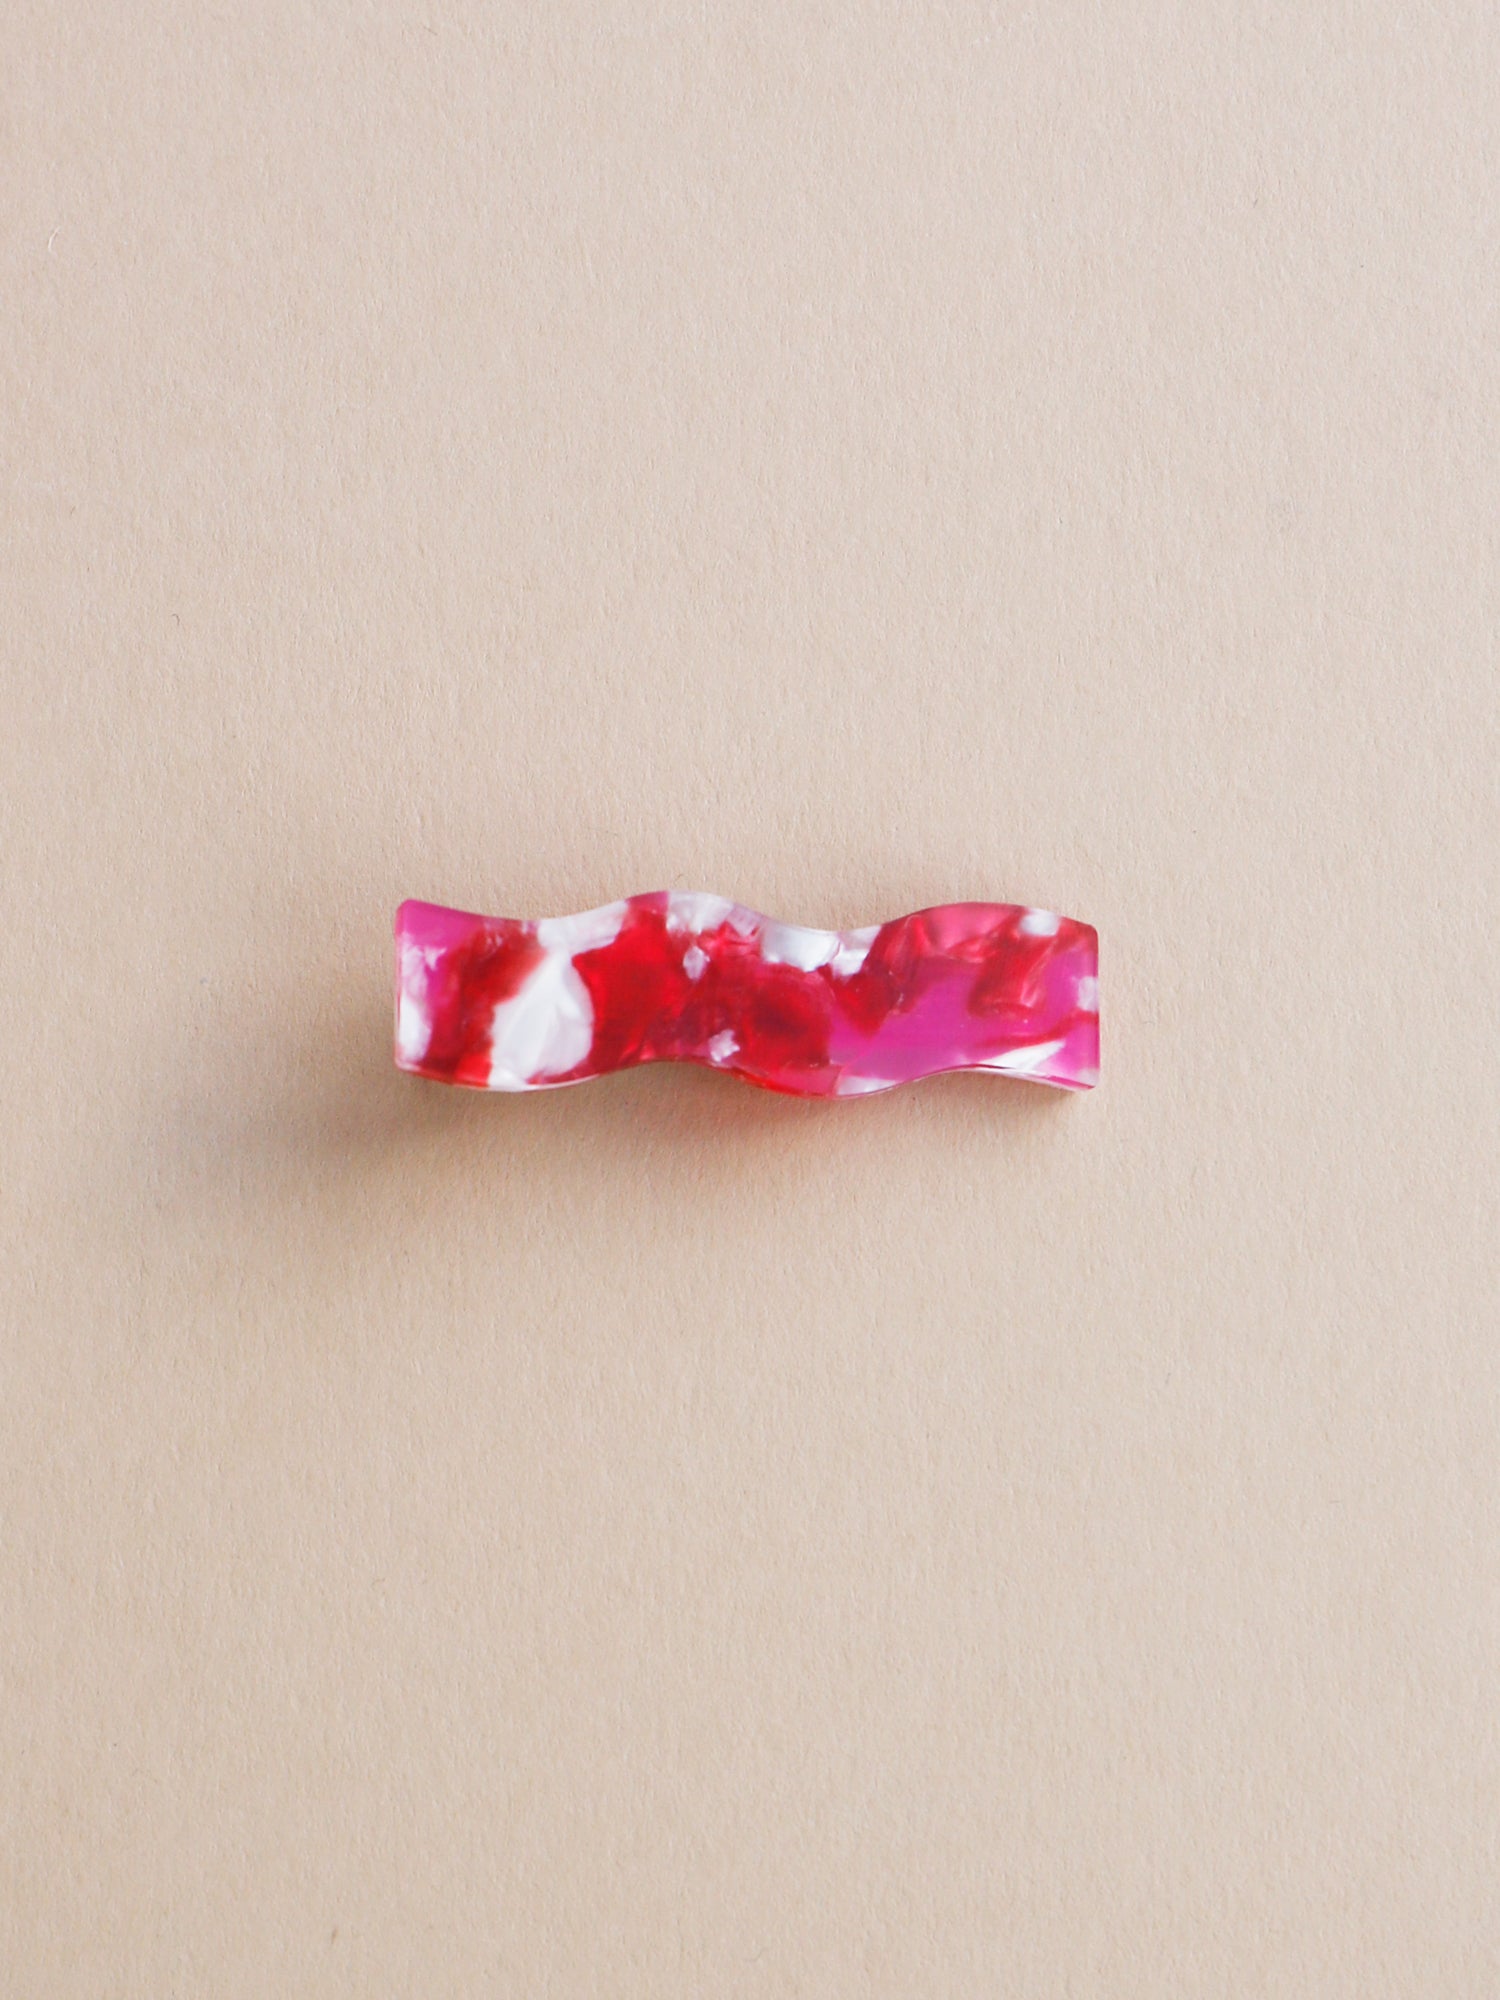 26. Mini Willow Hair Clip in Raspberry Crush - Discontinued